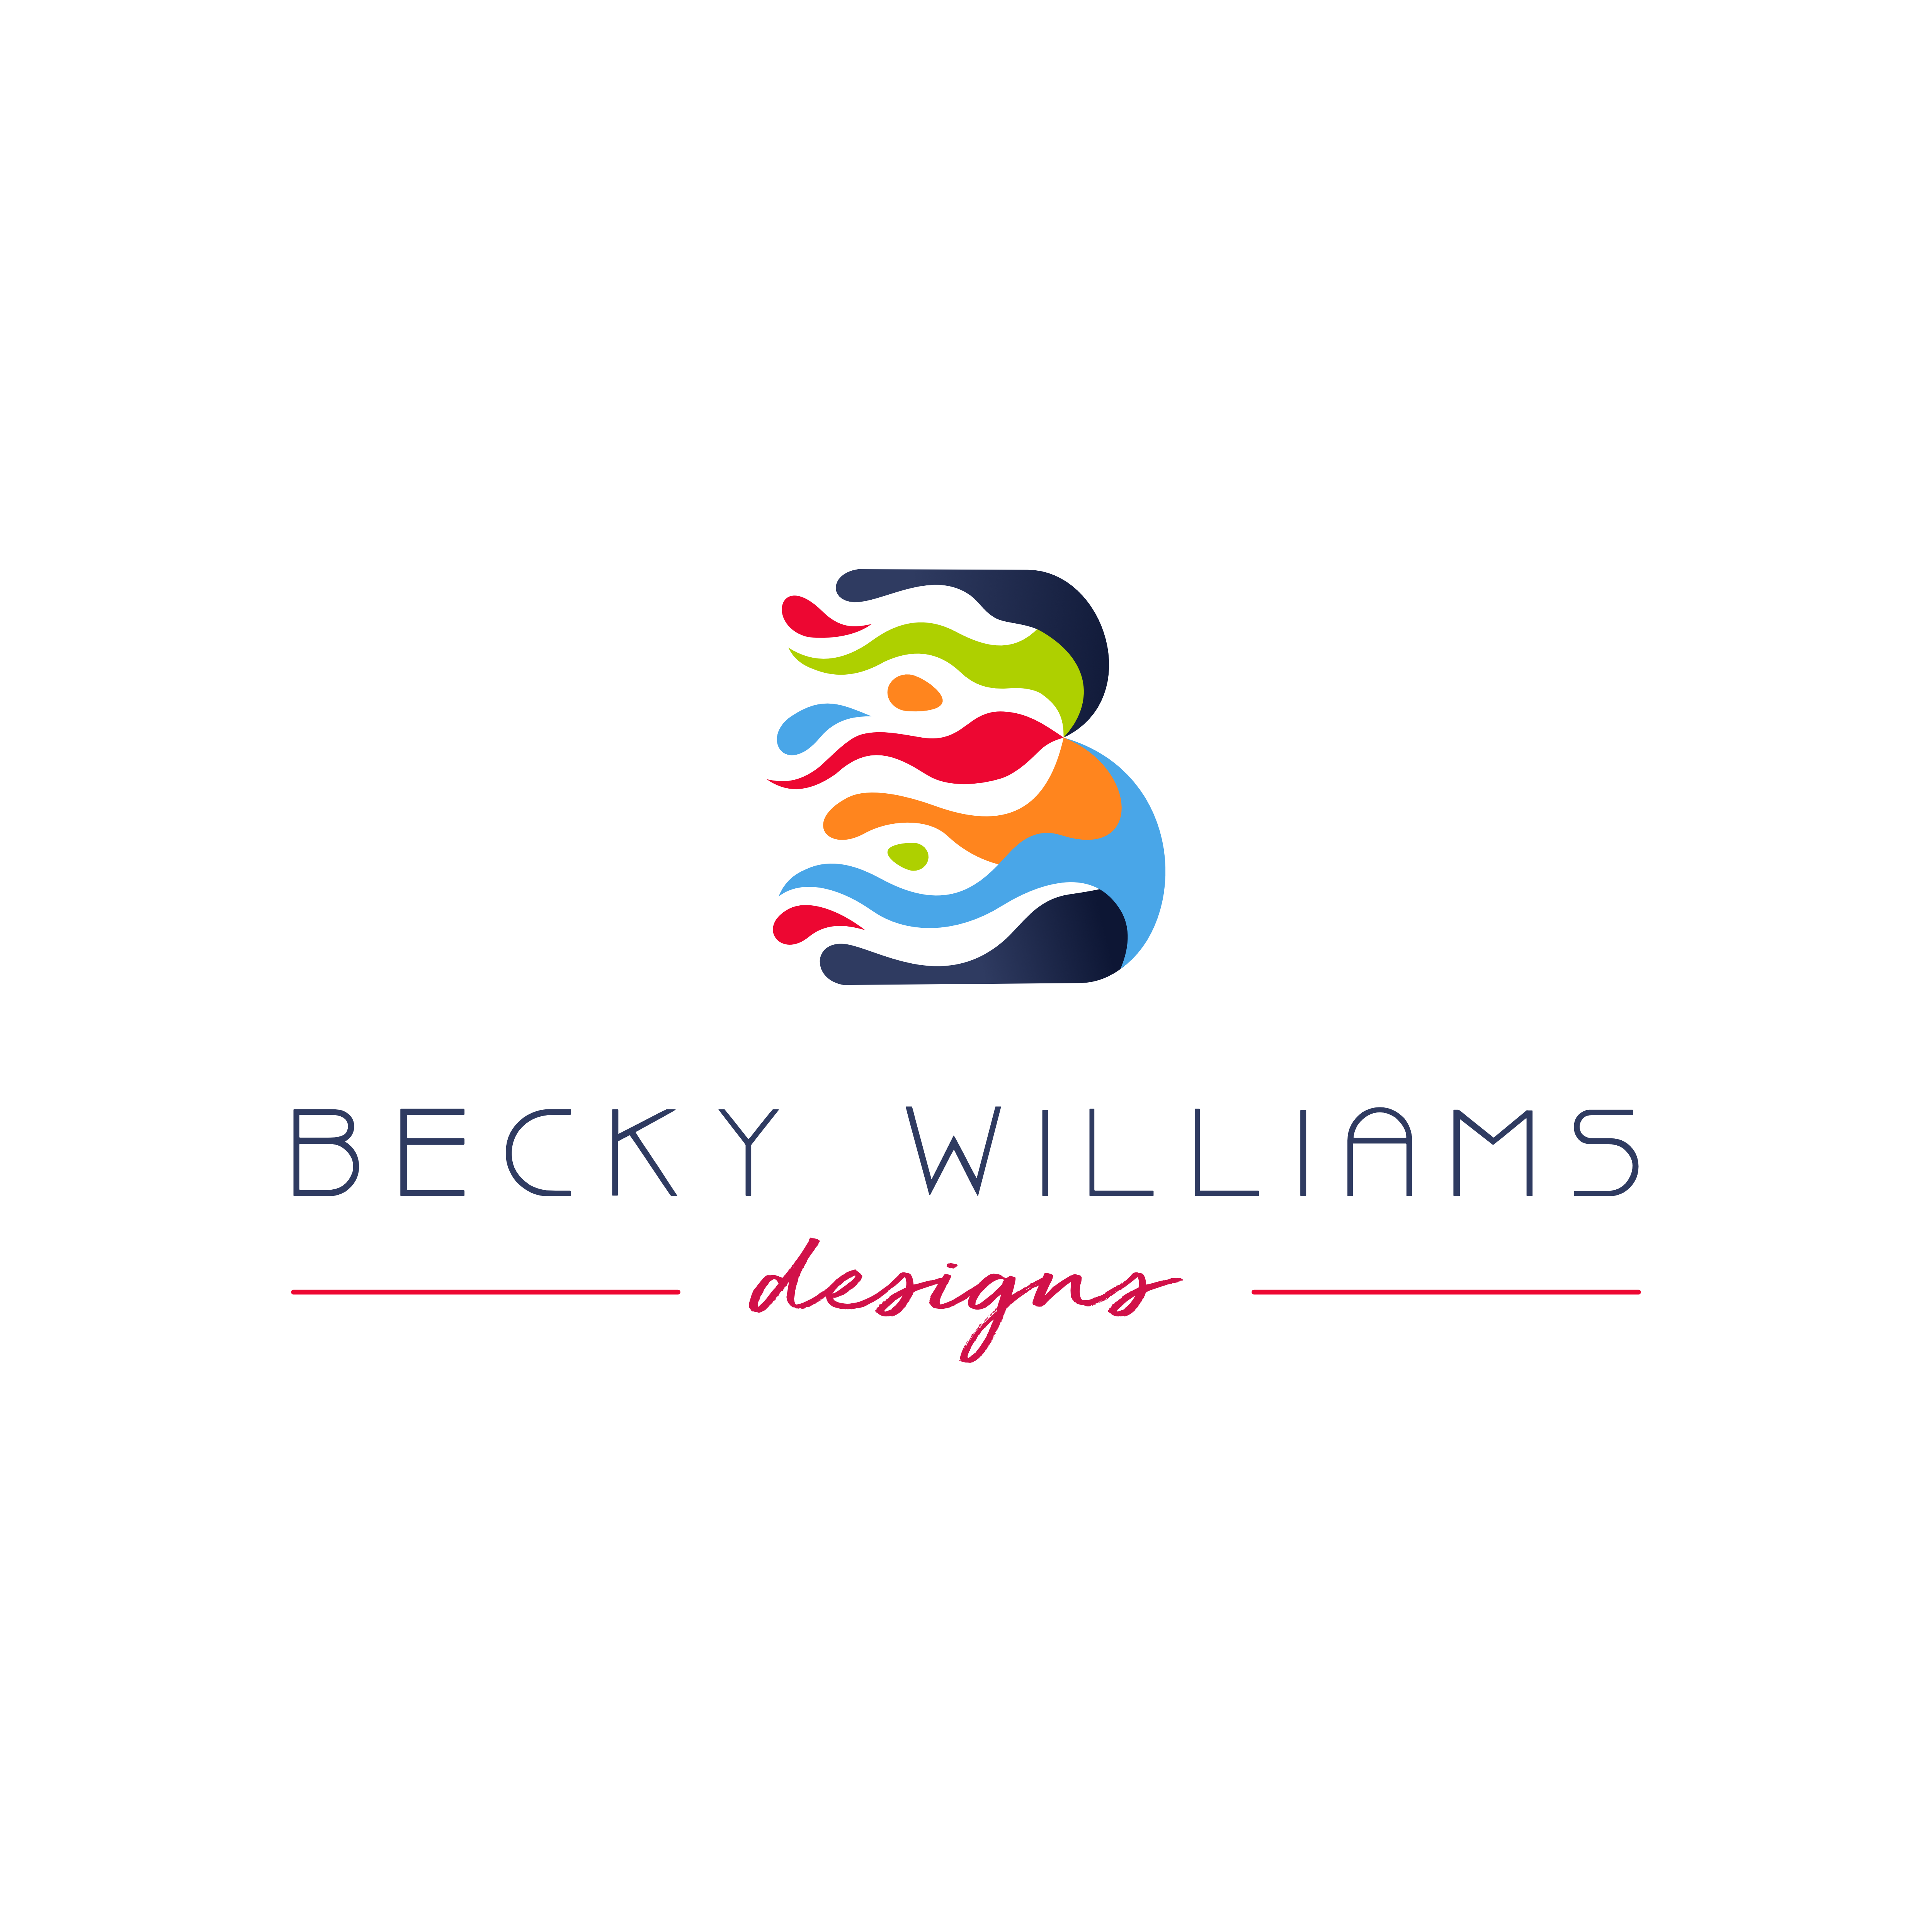 Becky Williams Designs